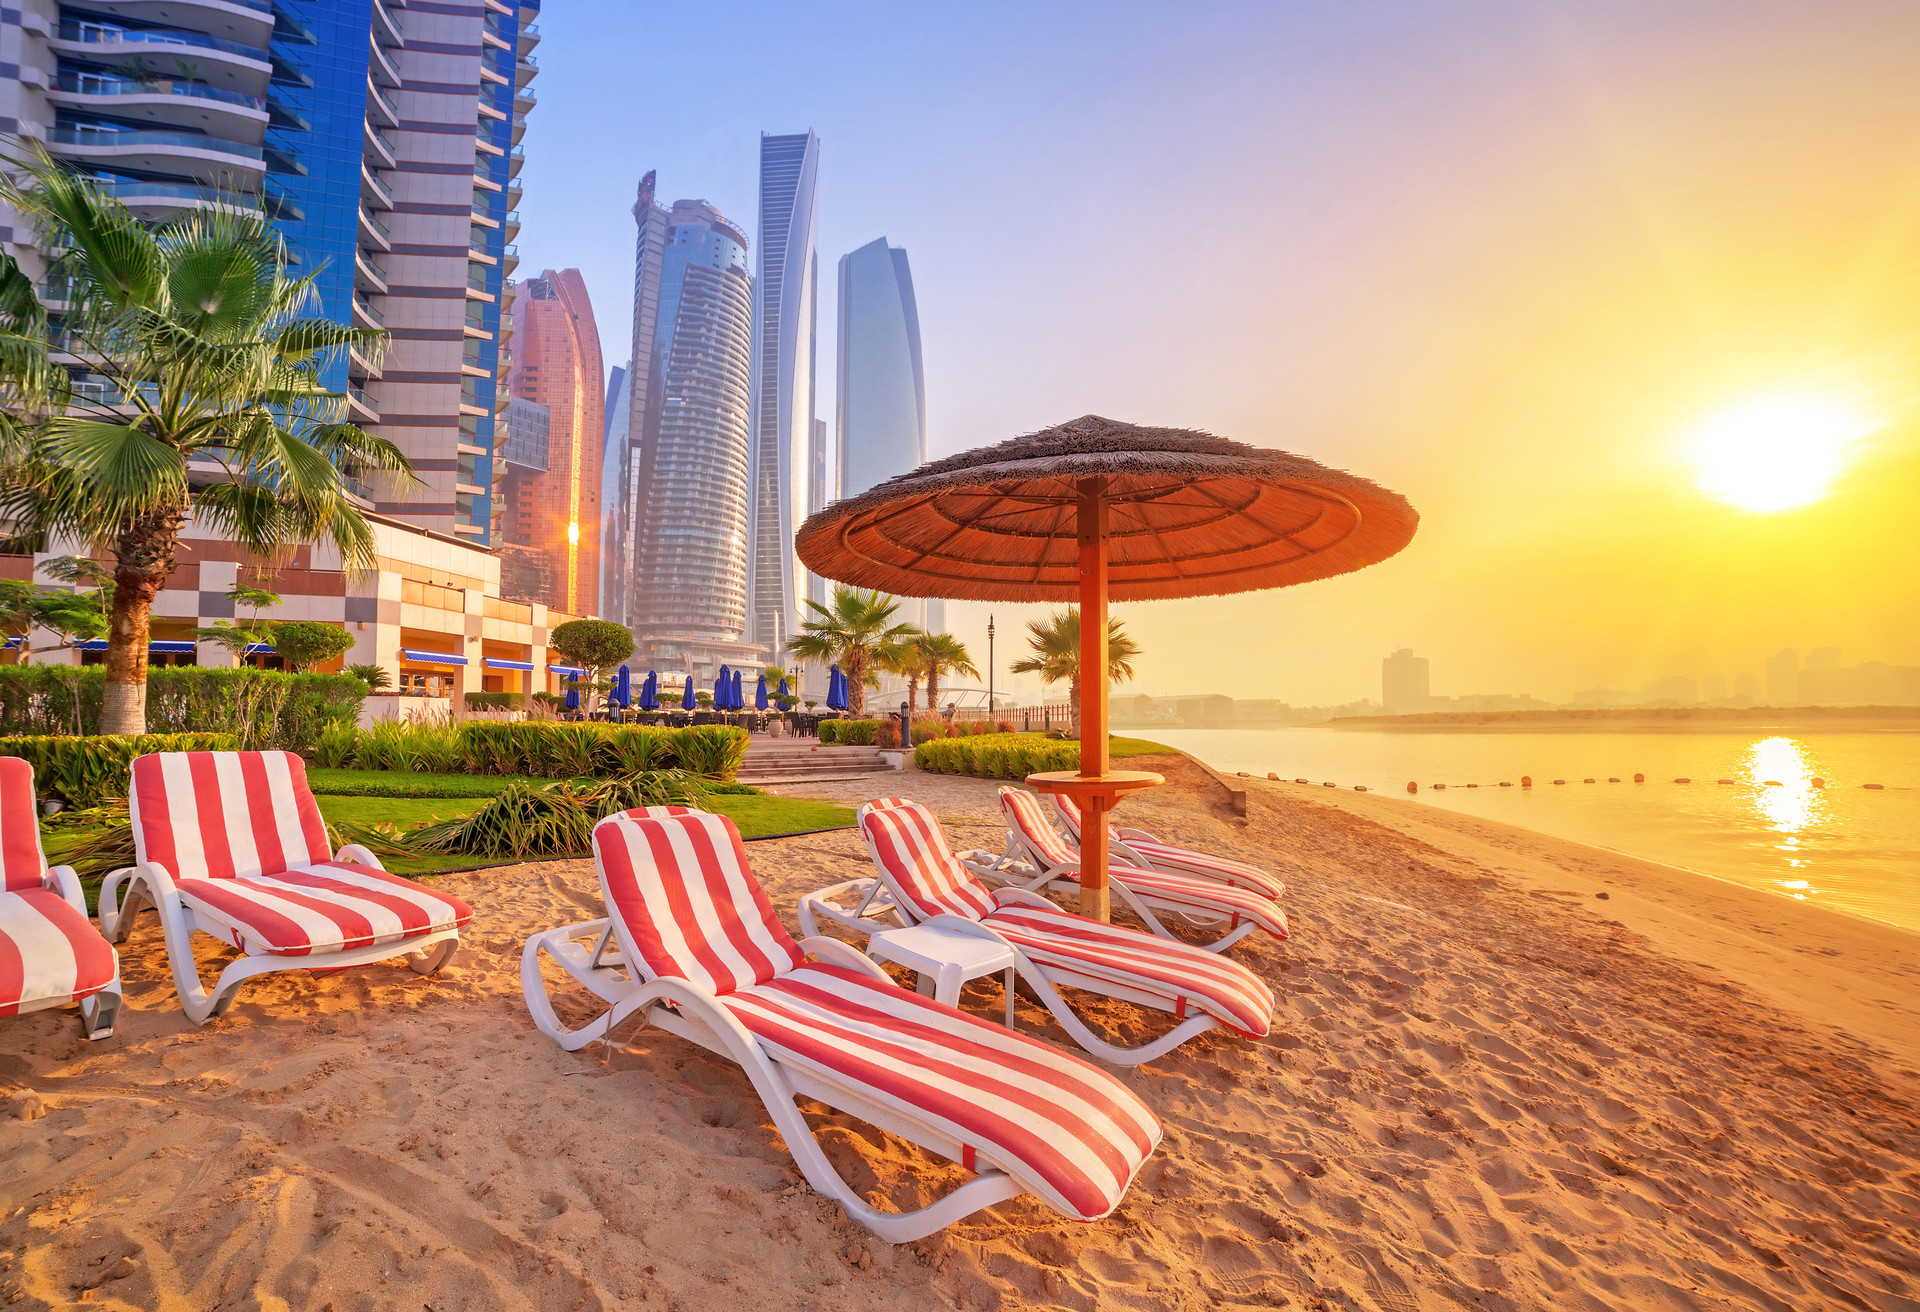 Sunrise on the beach at Perian Gulf in Abu Dhabi; Shutterstock ID 228261805